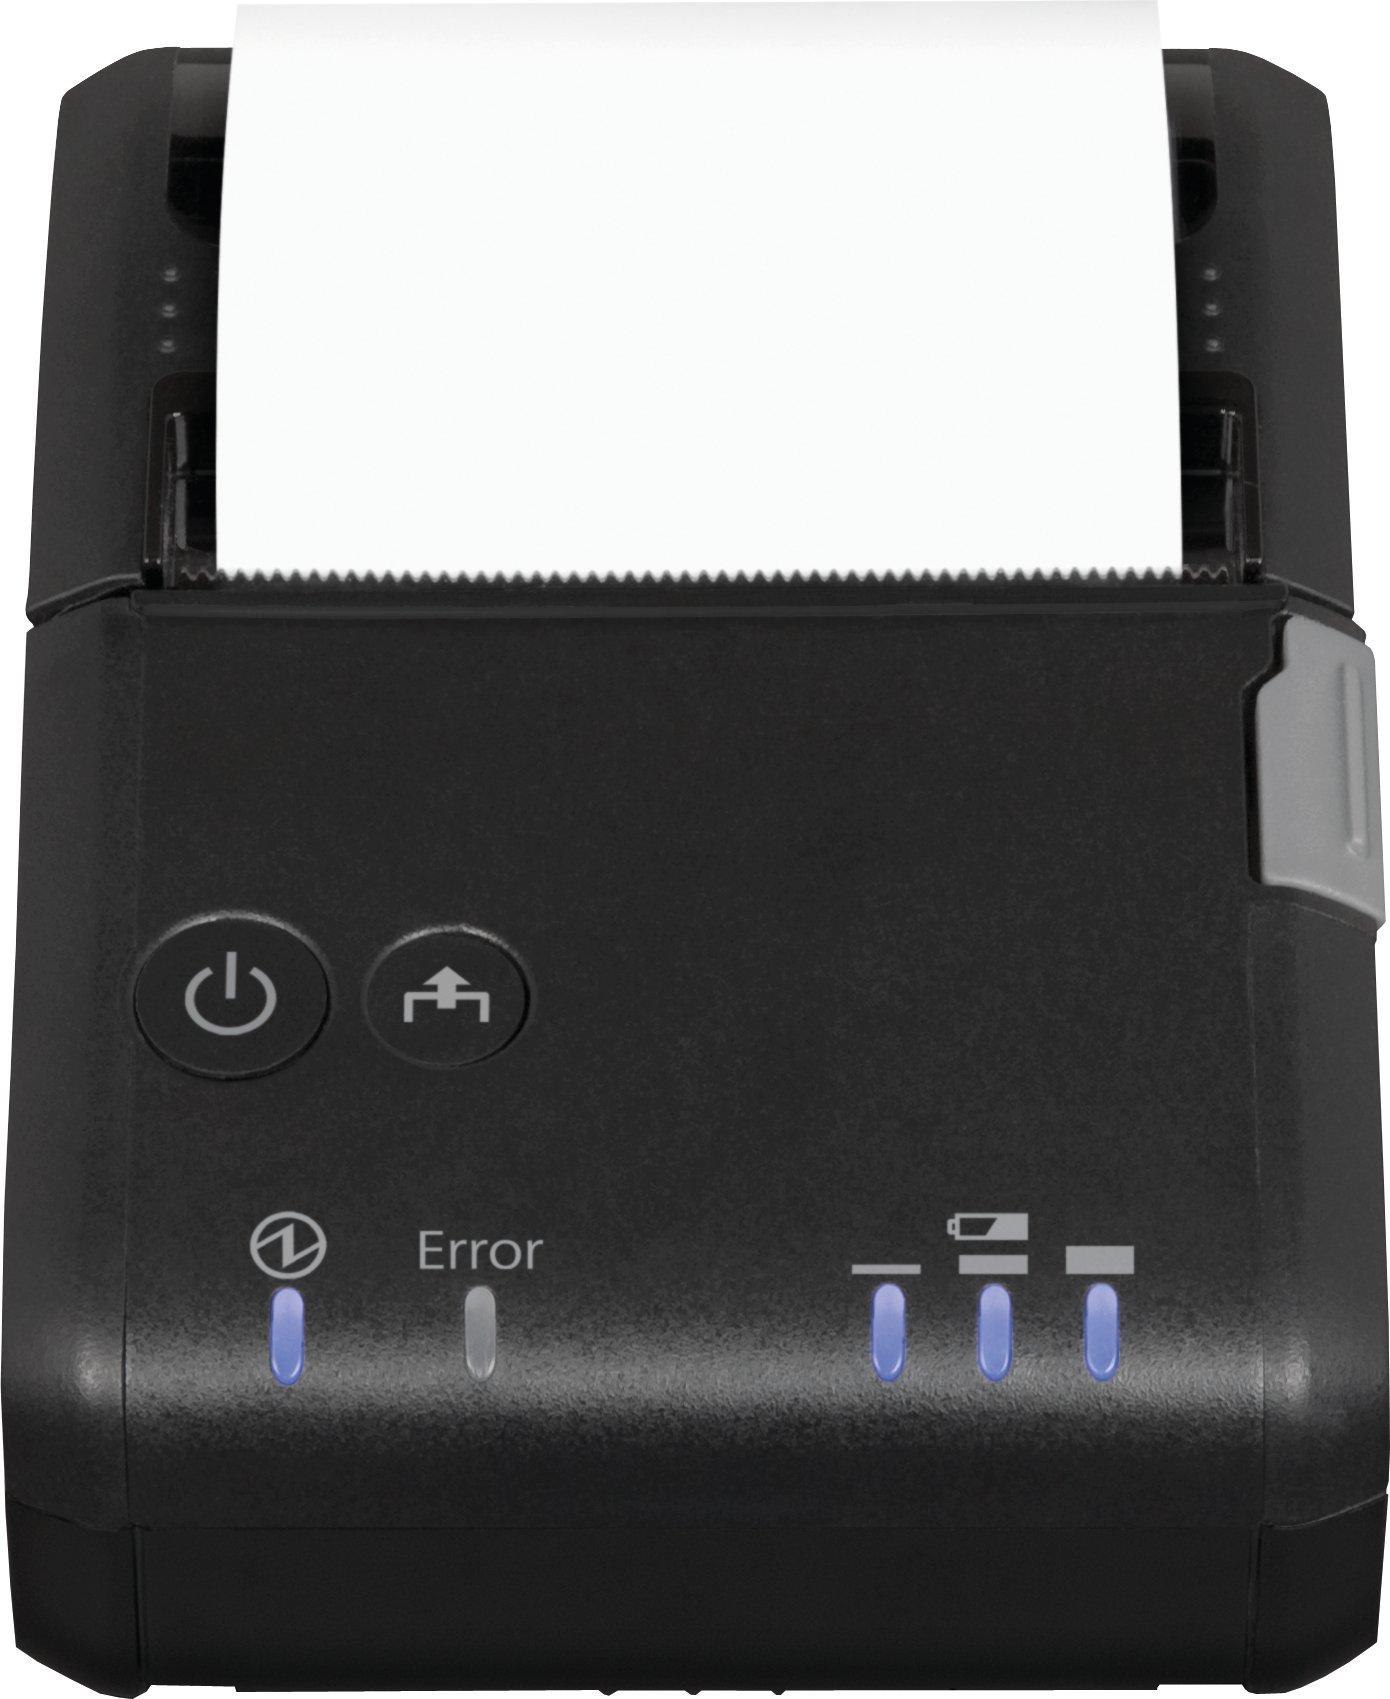 Stampante portatile per scontrini TM-P20, Mobile Printers, Stampanti POS, Retail, Prodotti